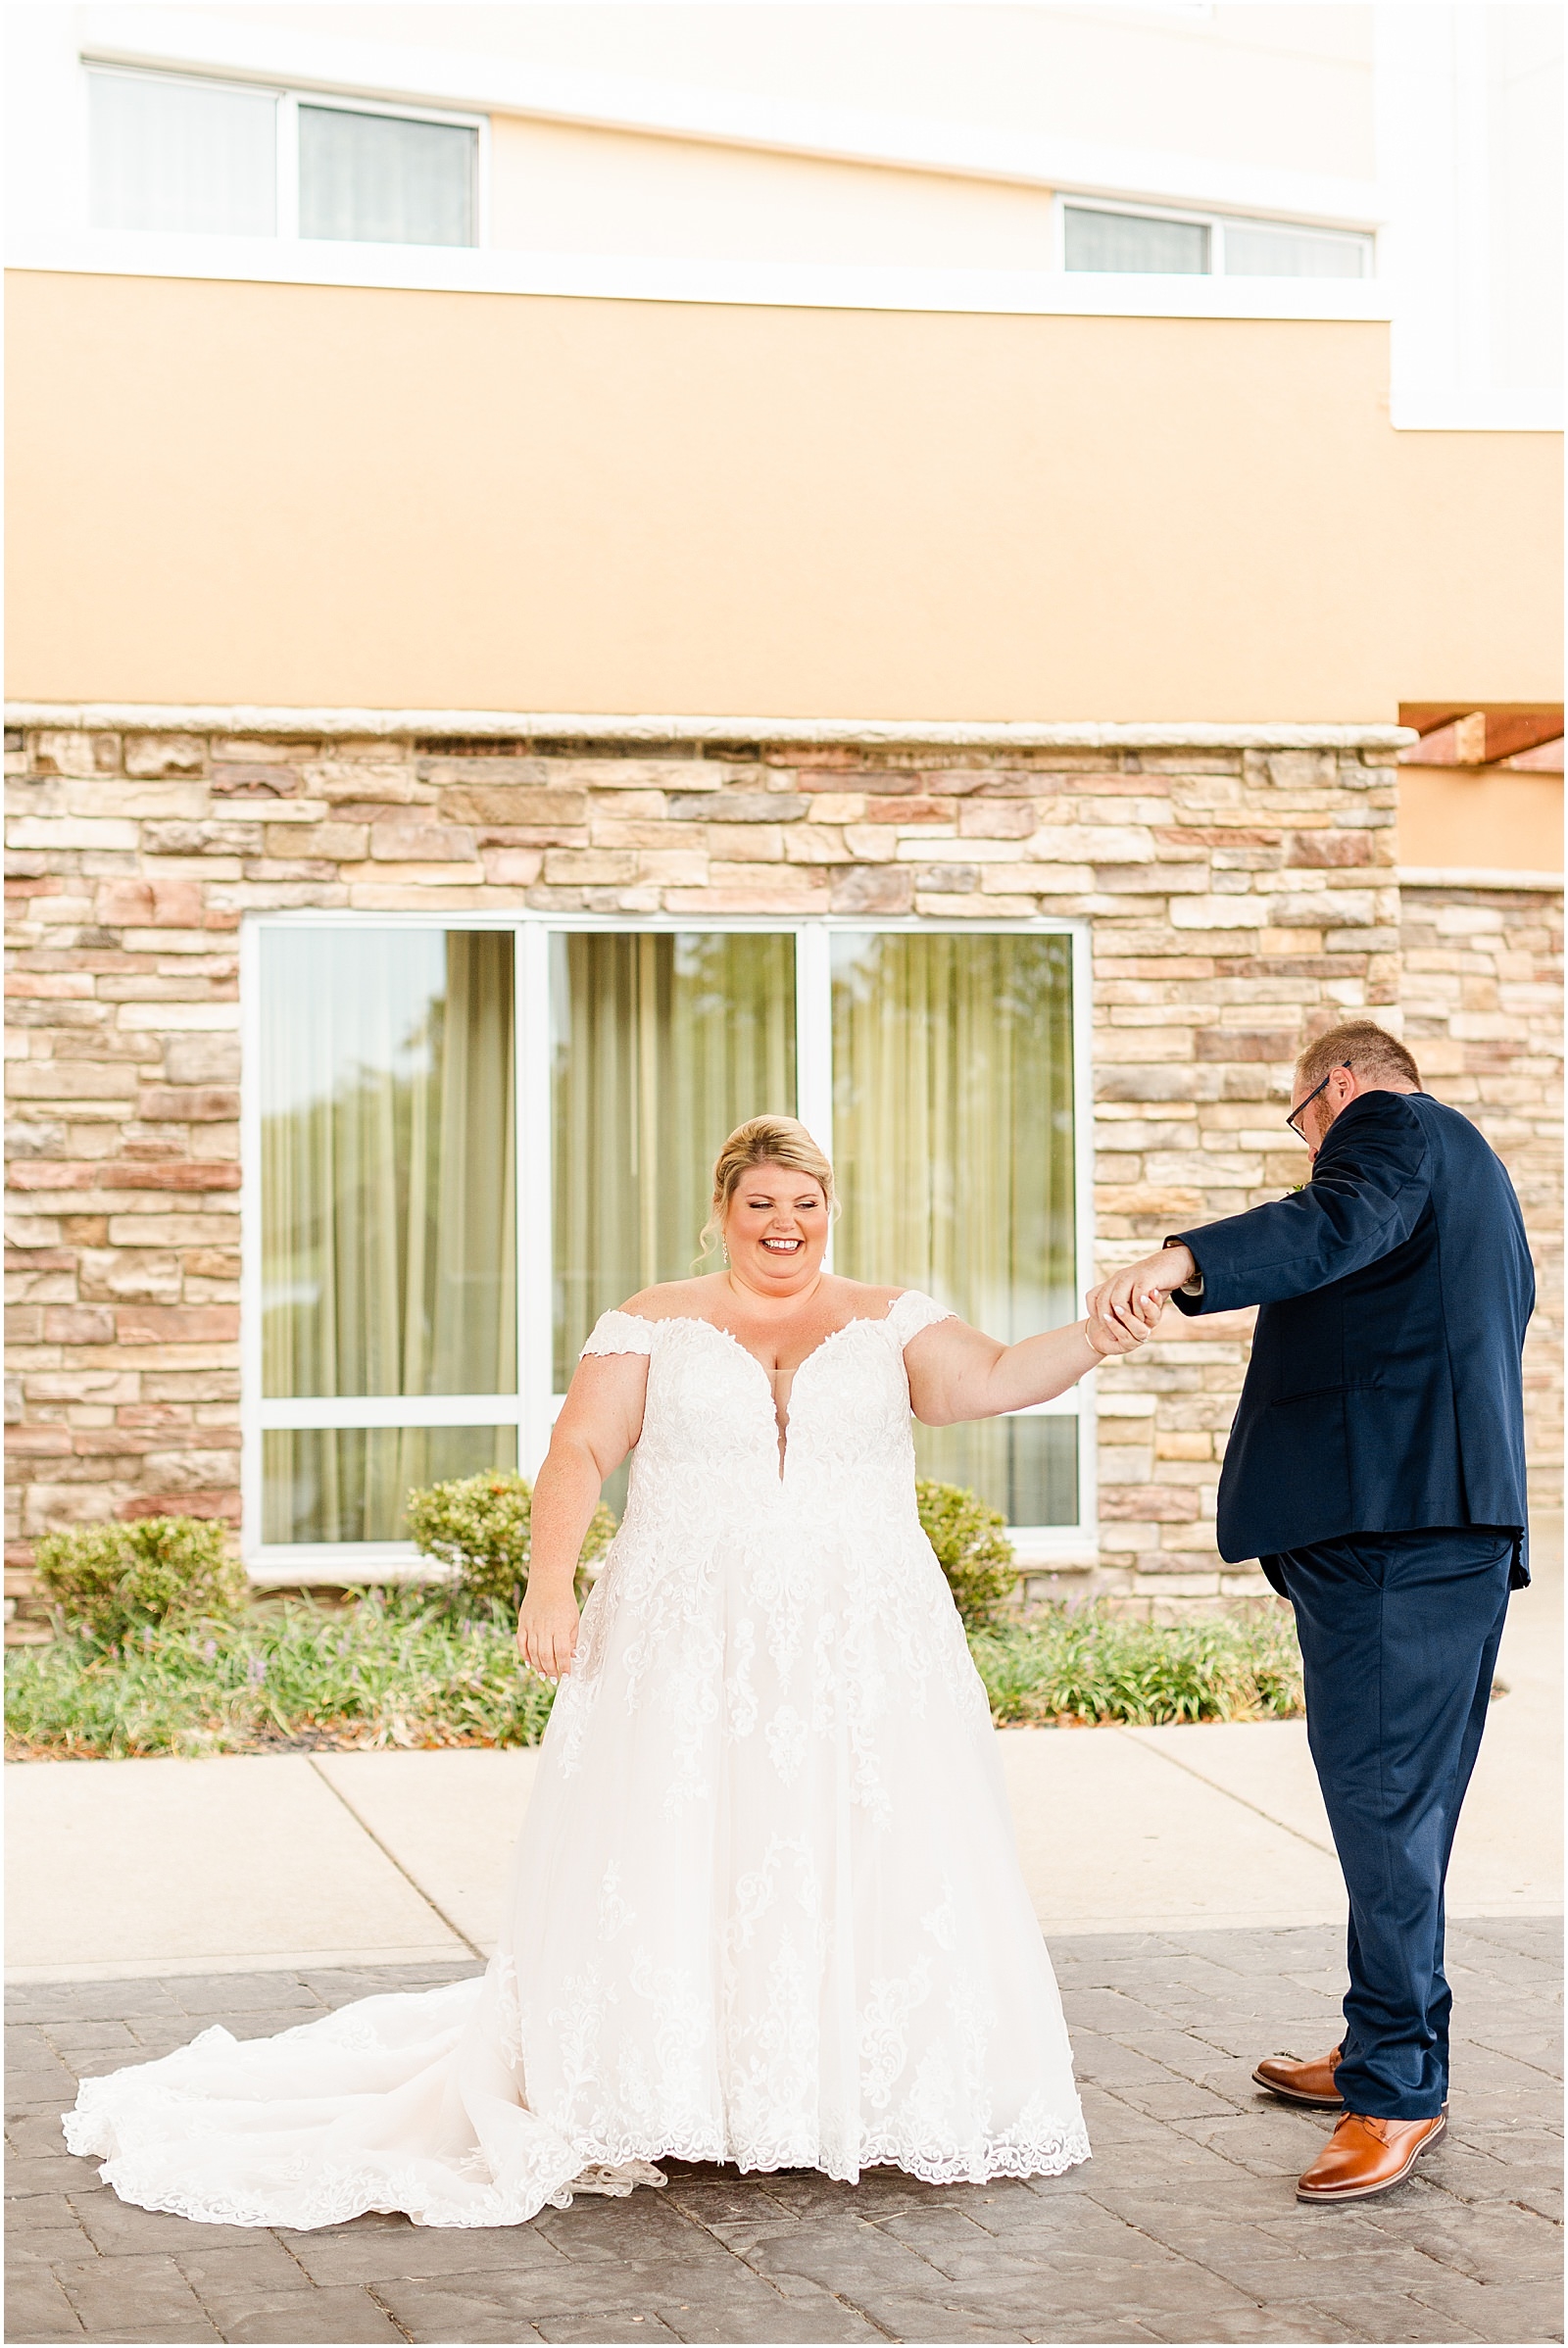 Brittany and Neil's Wedding at Neu Chapel Bret and Brandie | Evansville Photographers | @bretandbrandie-0043.jpg